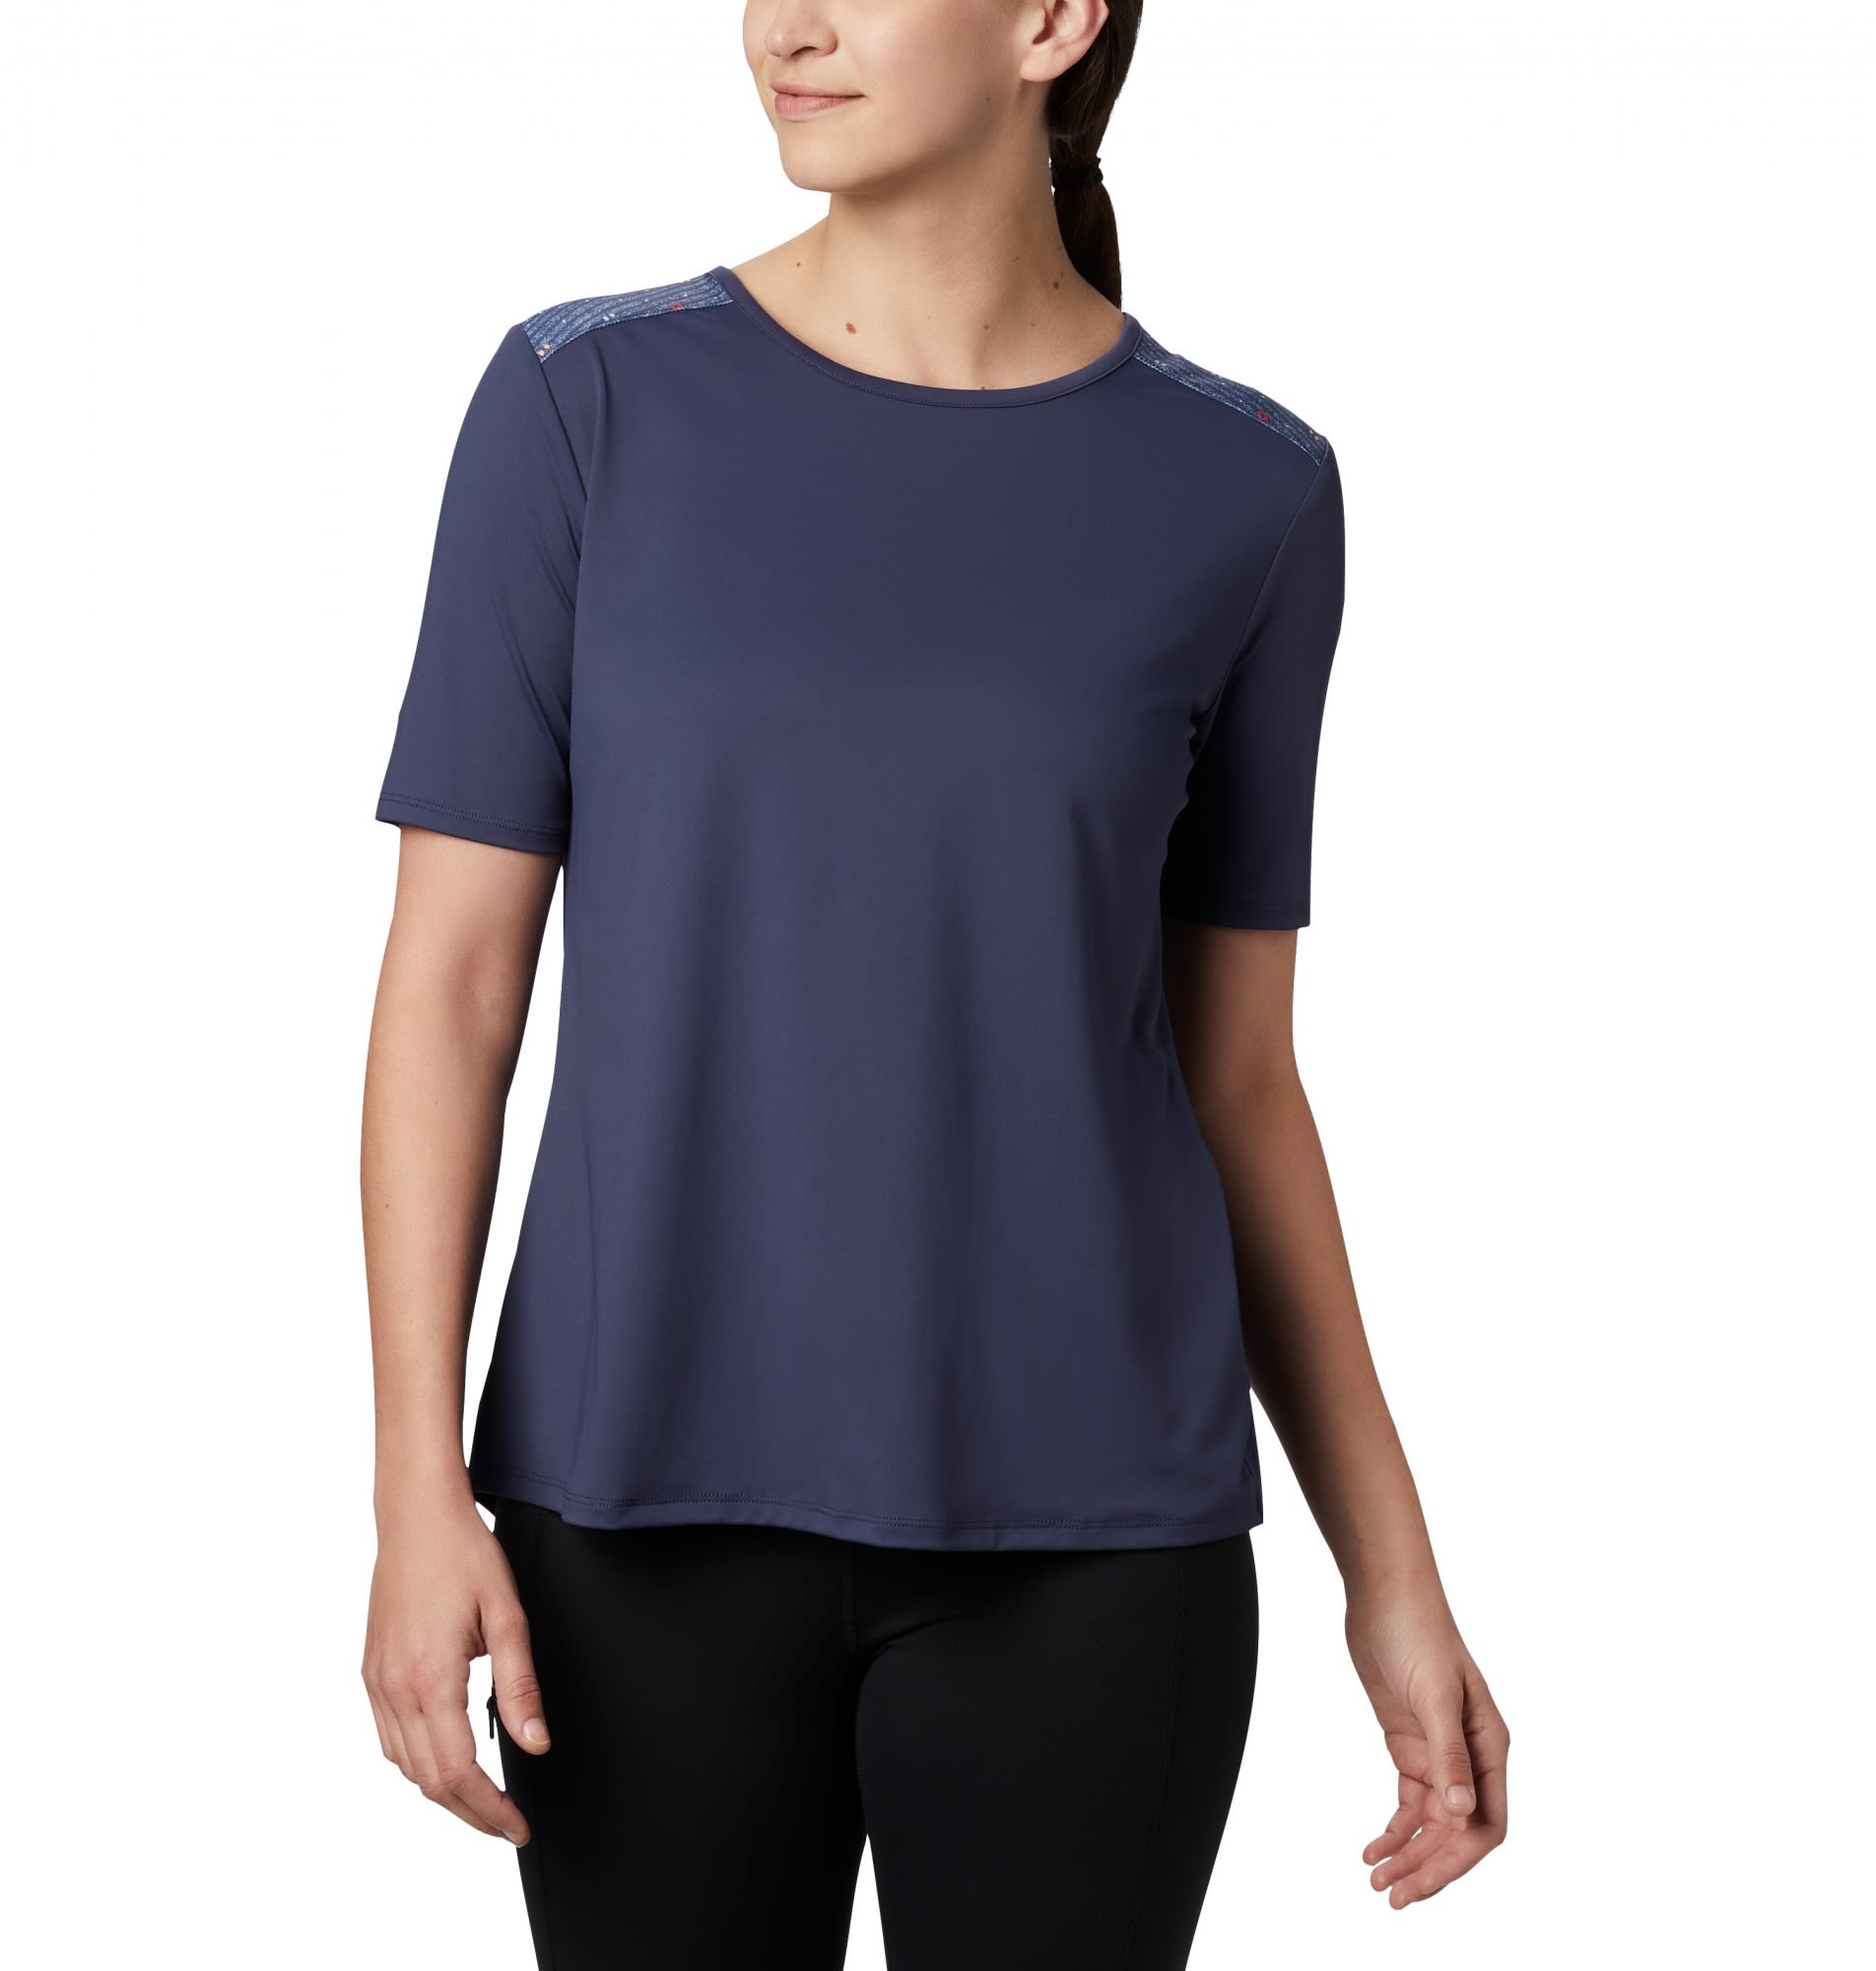 Columbia Chill River Short Sleeve Shirt Blau- Female Kurzarm-Shirts- Grsse S - Farbe Nocturnal - Print